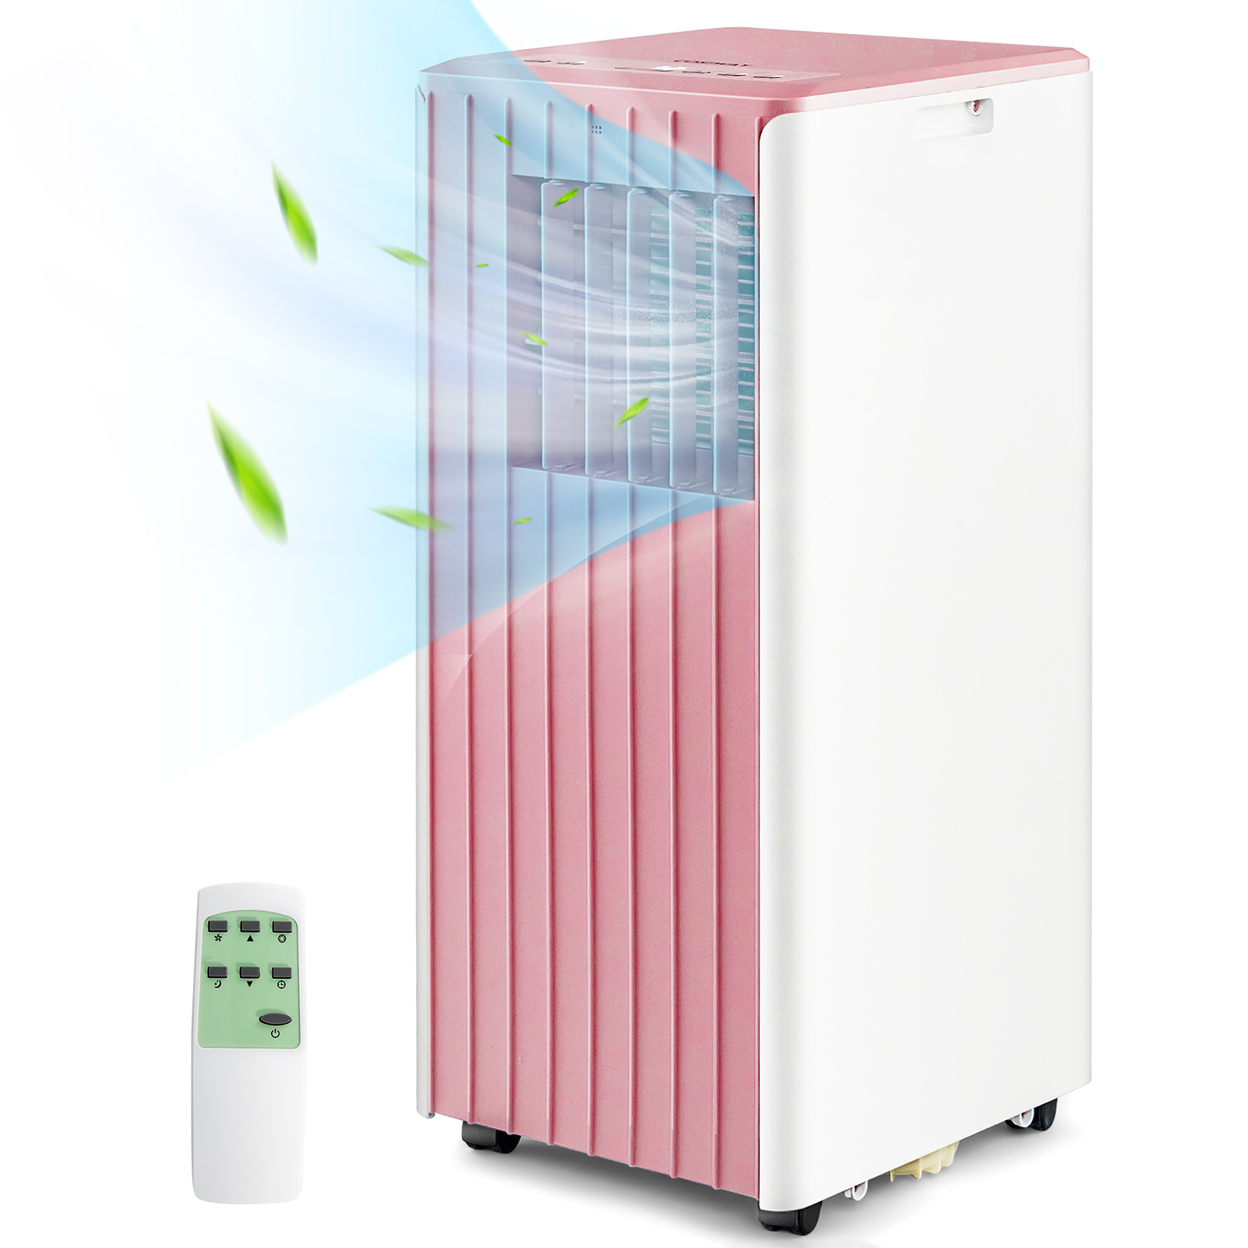 Portable Air Conditioner 10000 BTU ASHRAE 3-in-1 AC Unit W/ Humidifier & Sleep Mode - White +Pink